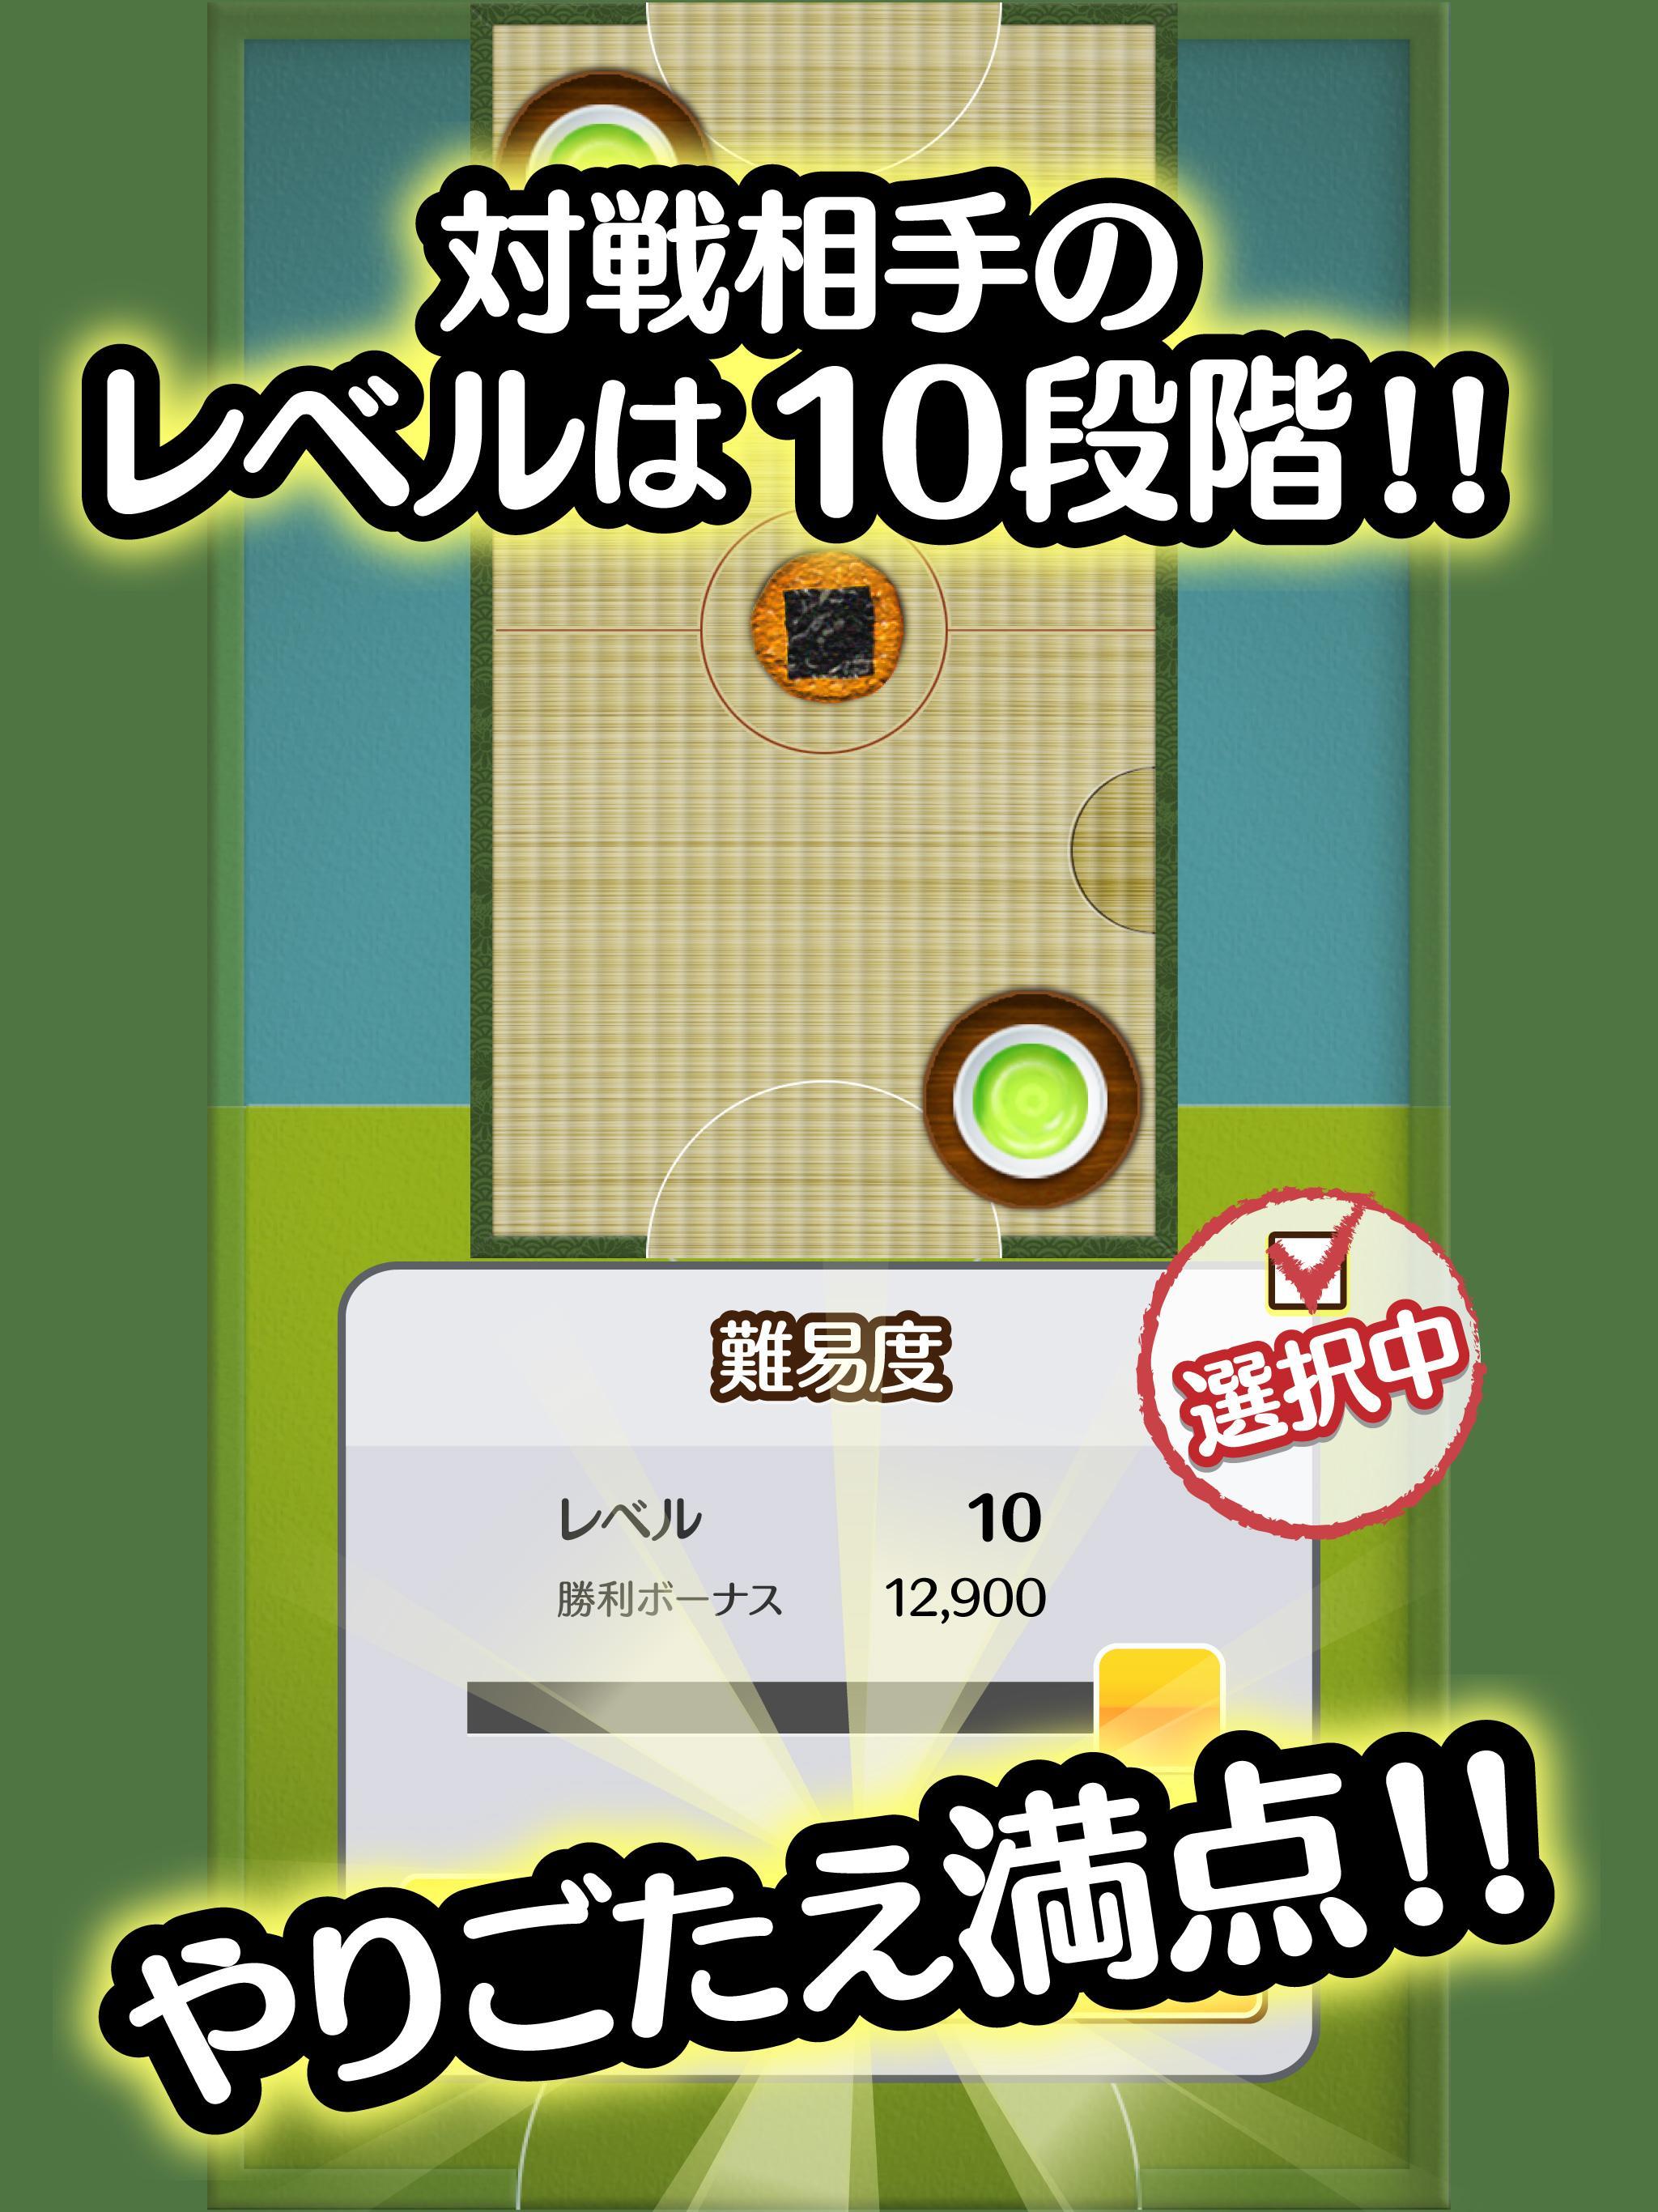 Screenshot of ふつうのエアホッケー 無料のホッケーゲーム